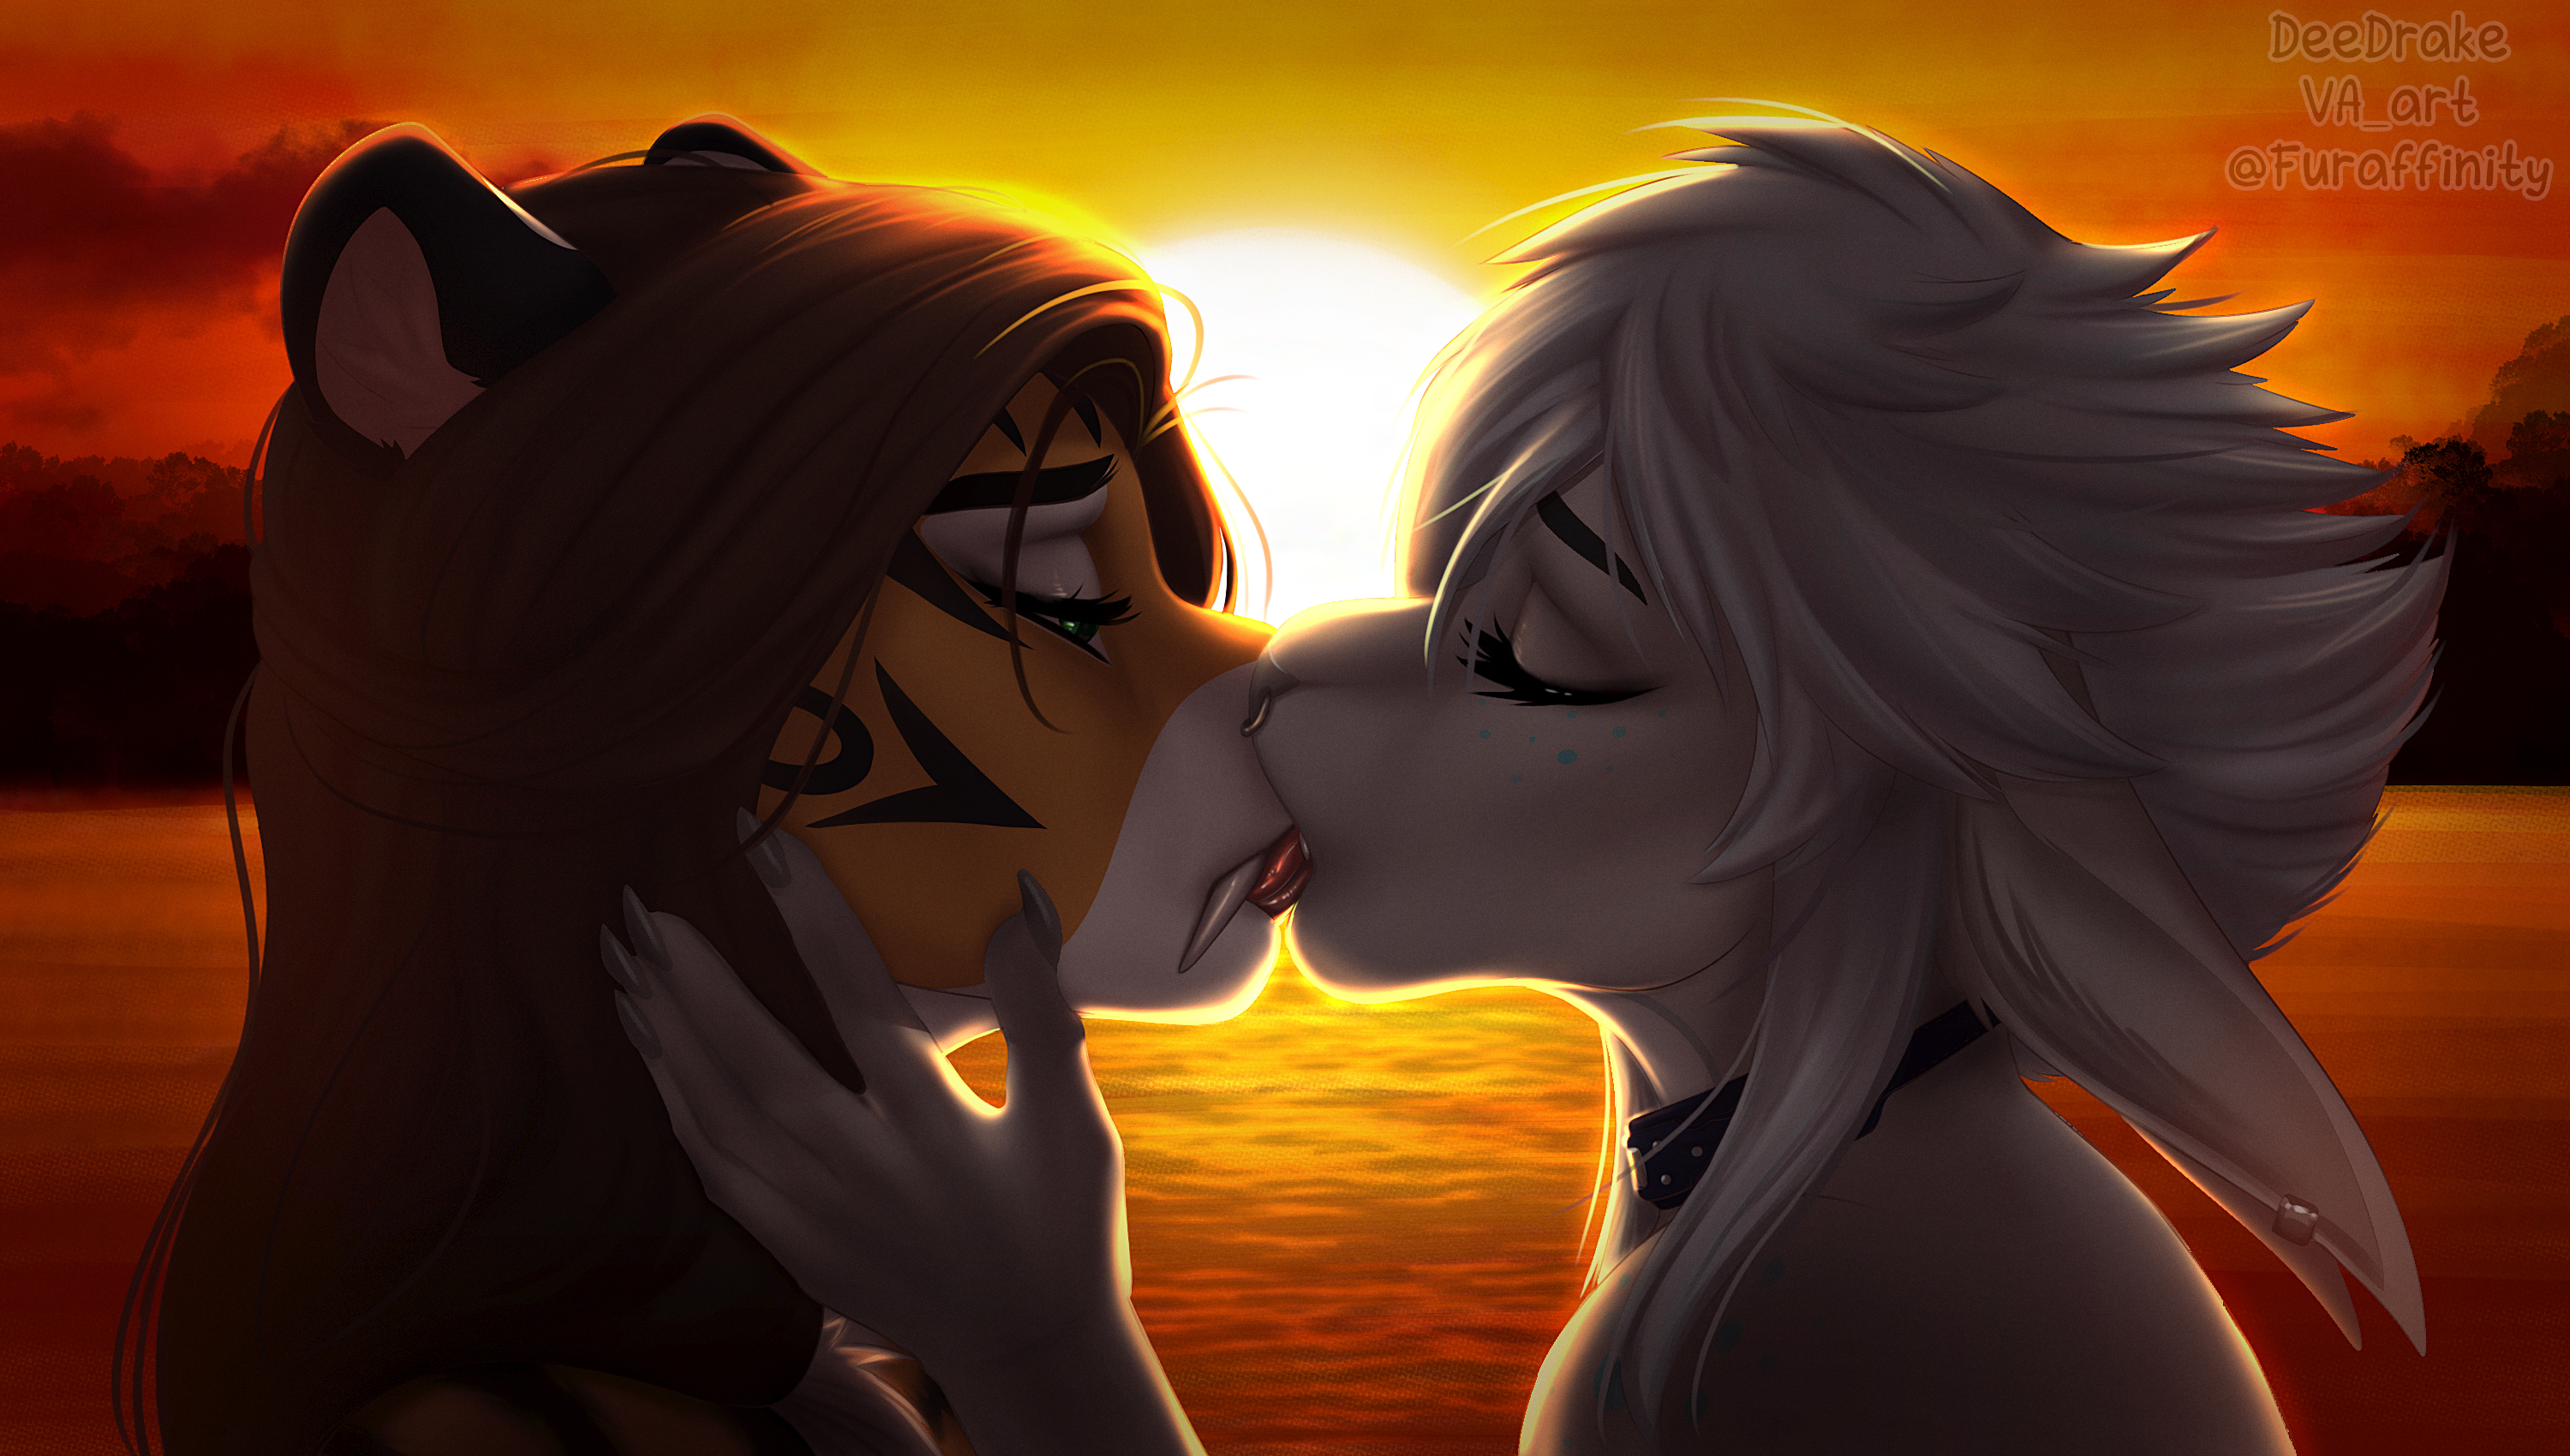 YCH Ara, Alex - Sunset Kiss (by VA_art and deedrake). 